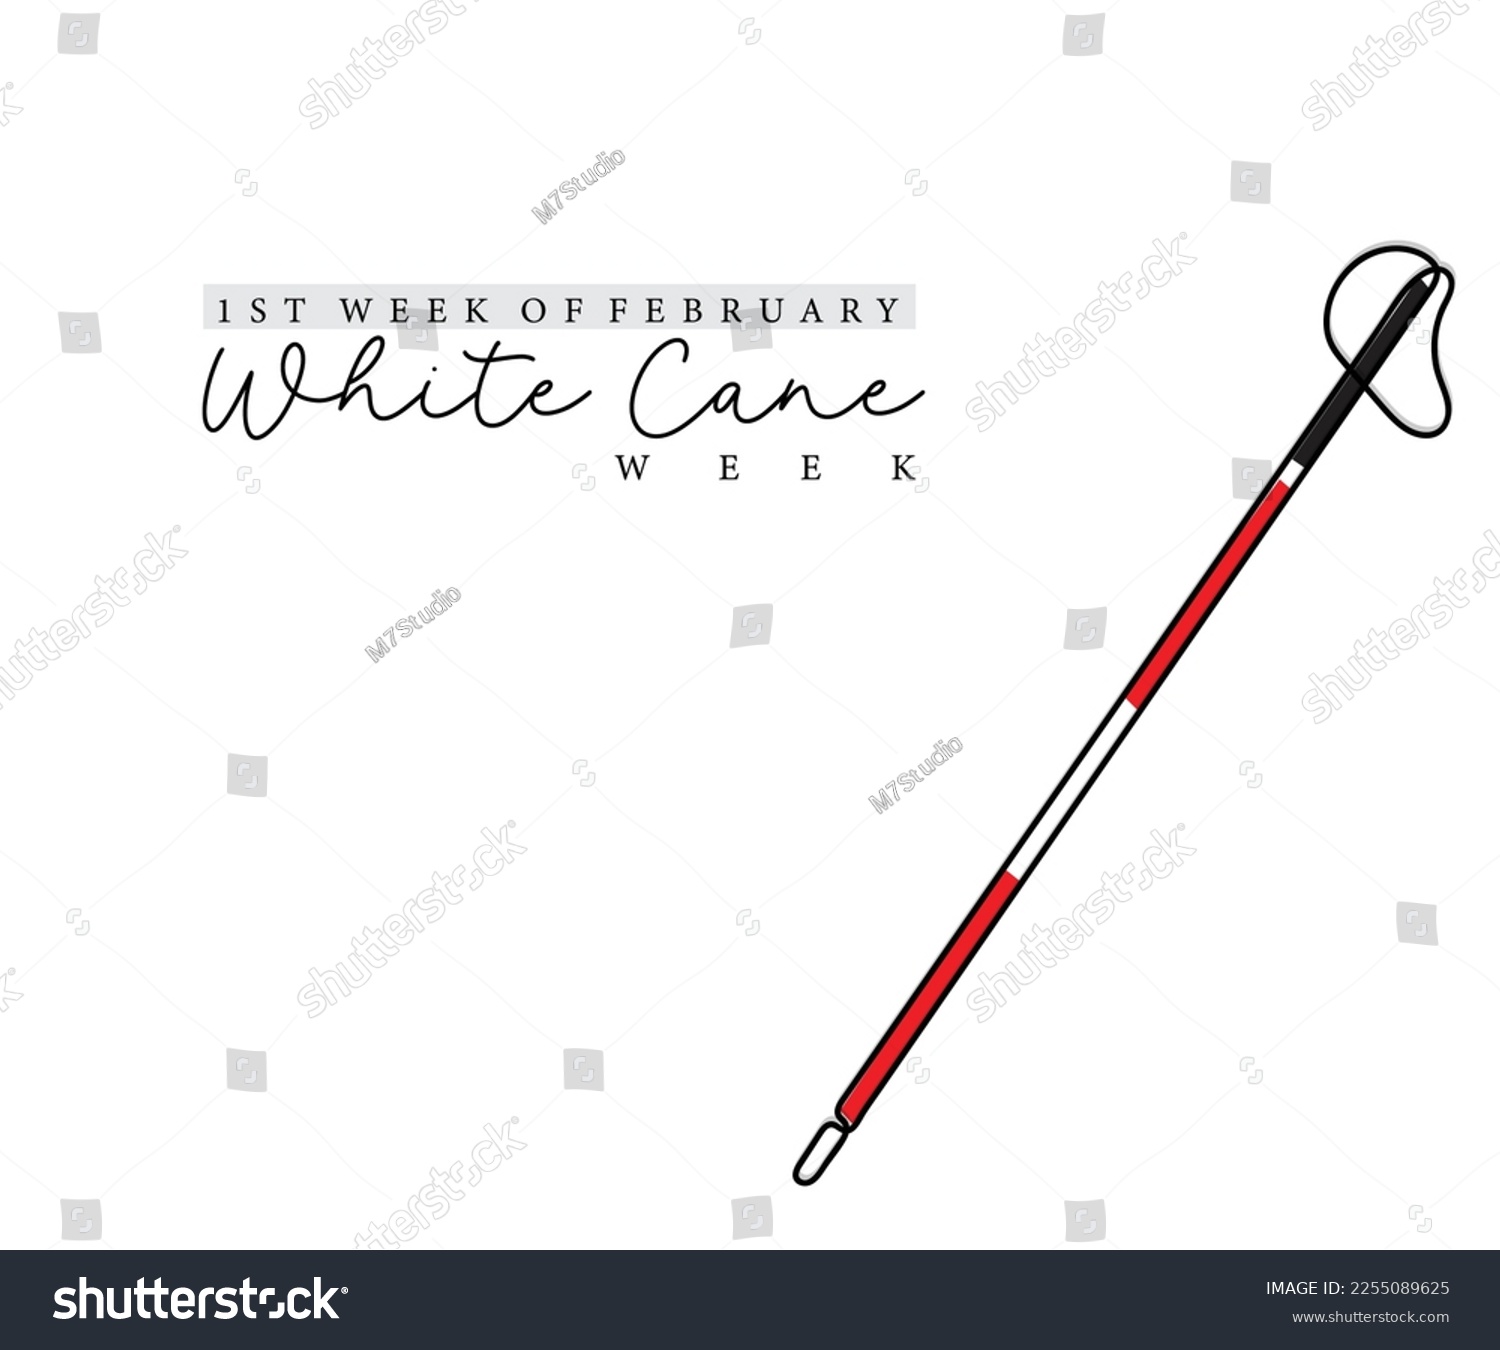 SVG of Line art vector. White cane awareness. Hand drawn doodles. svg